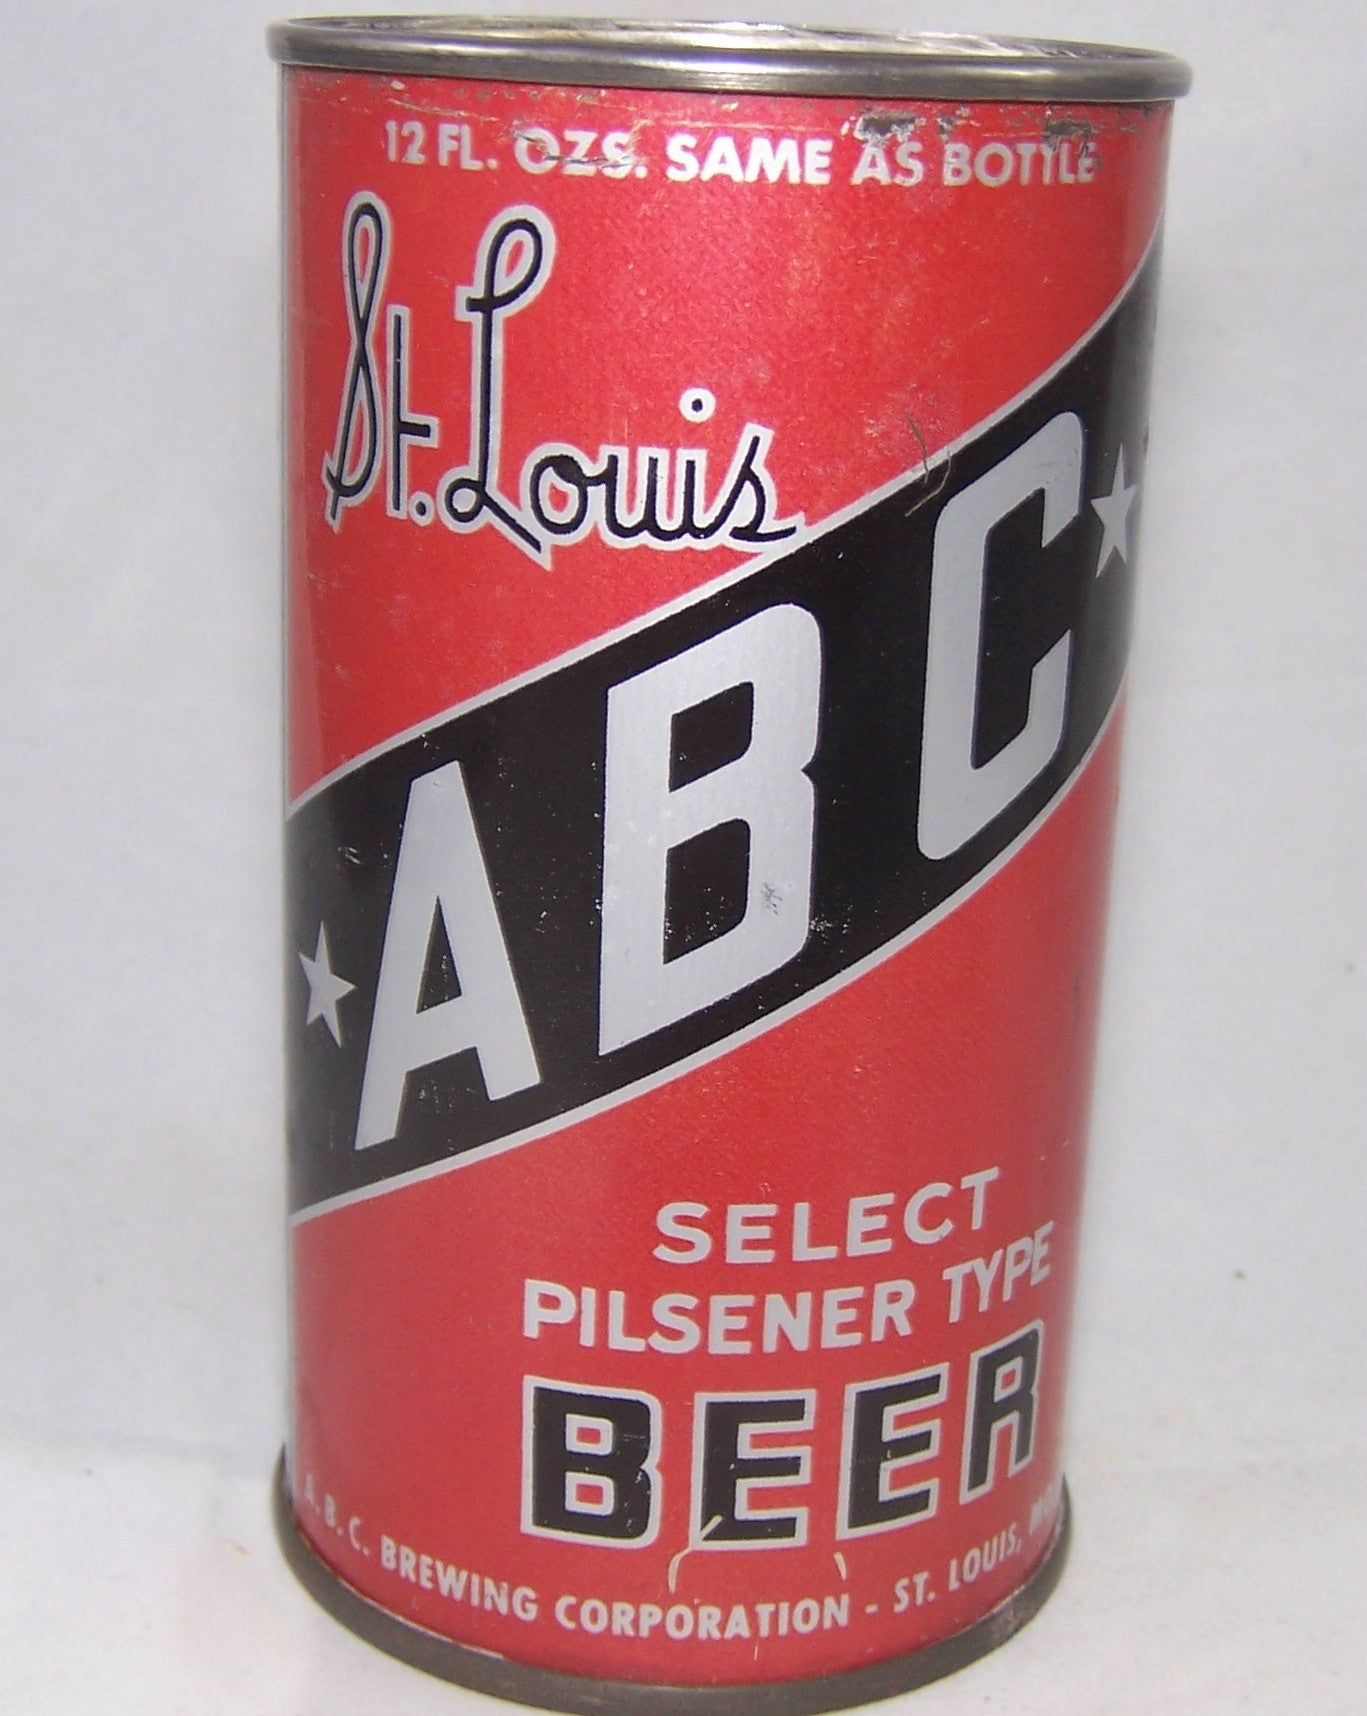 St. Louis ABC Pilsener Type Beer, Lilek #4, Grade 1-